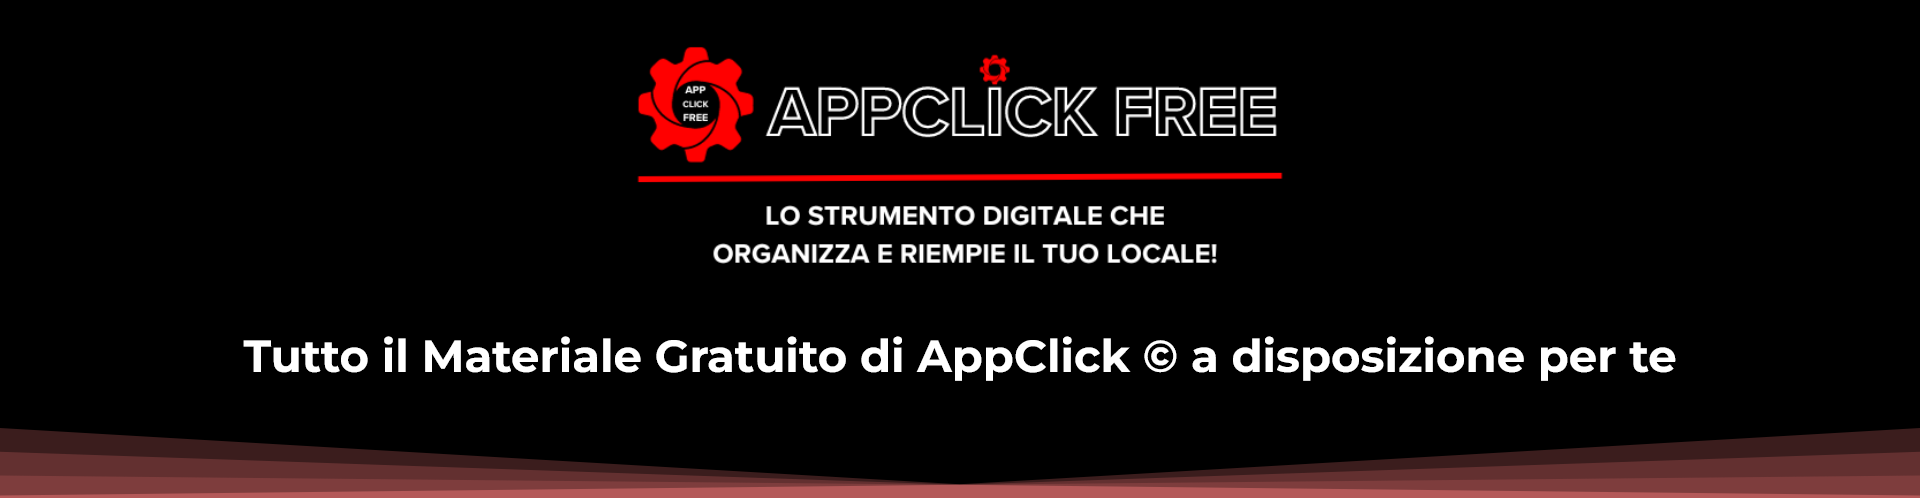 APPCLICK FREE - App Gratis per PMI